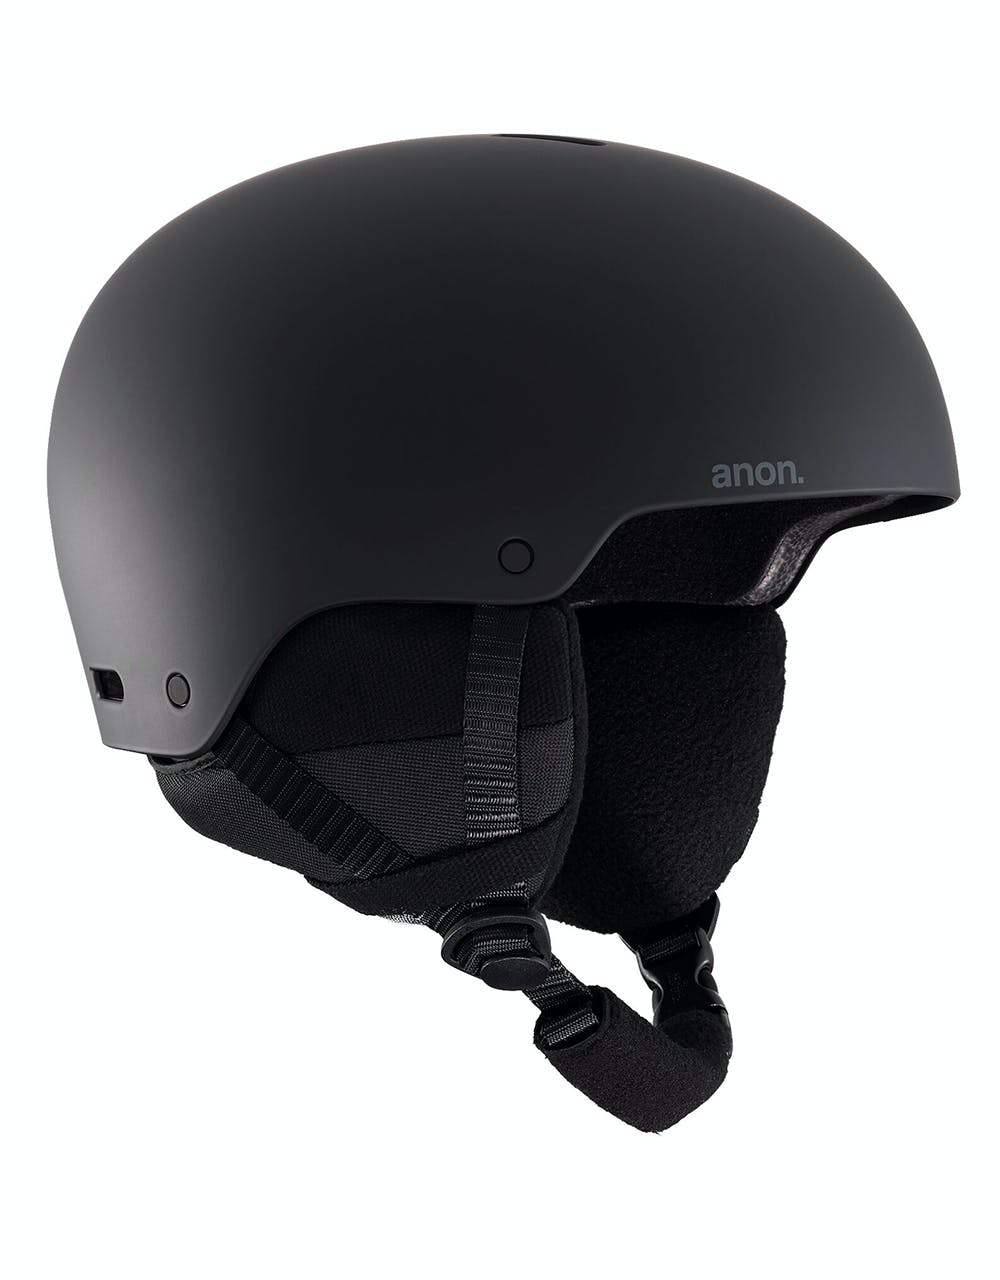 Anon Raider 3 Snowboard Helmet - Black